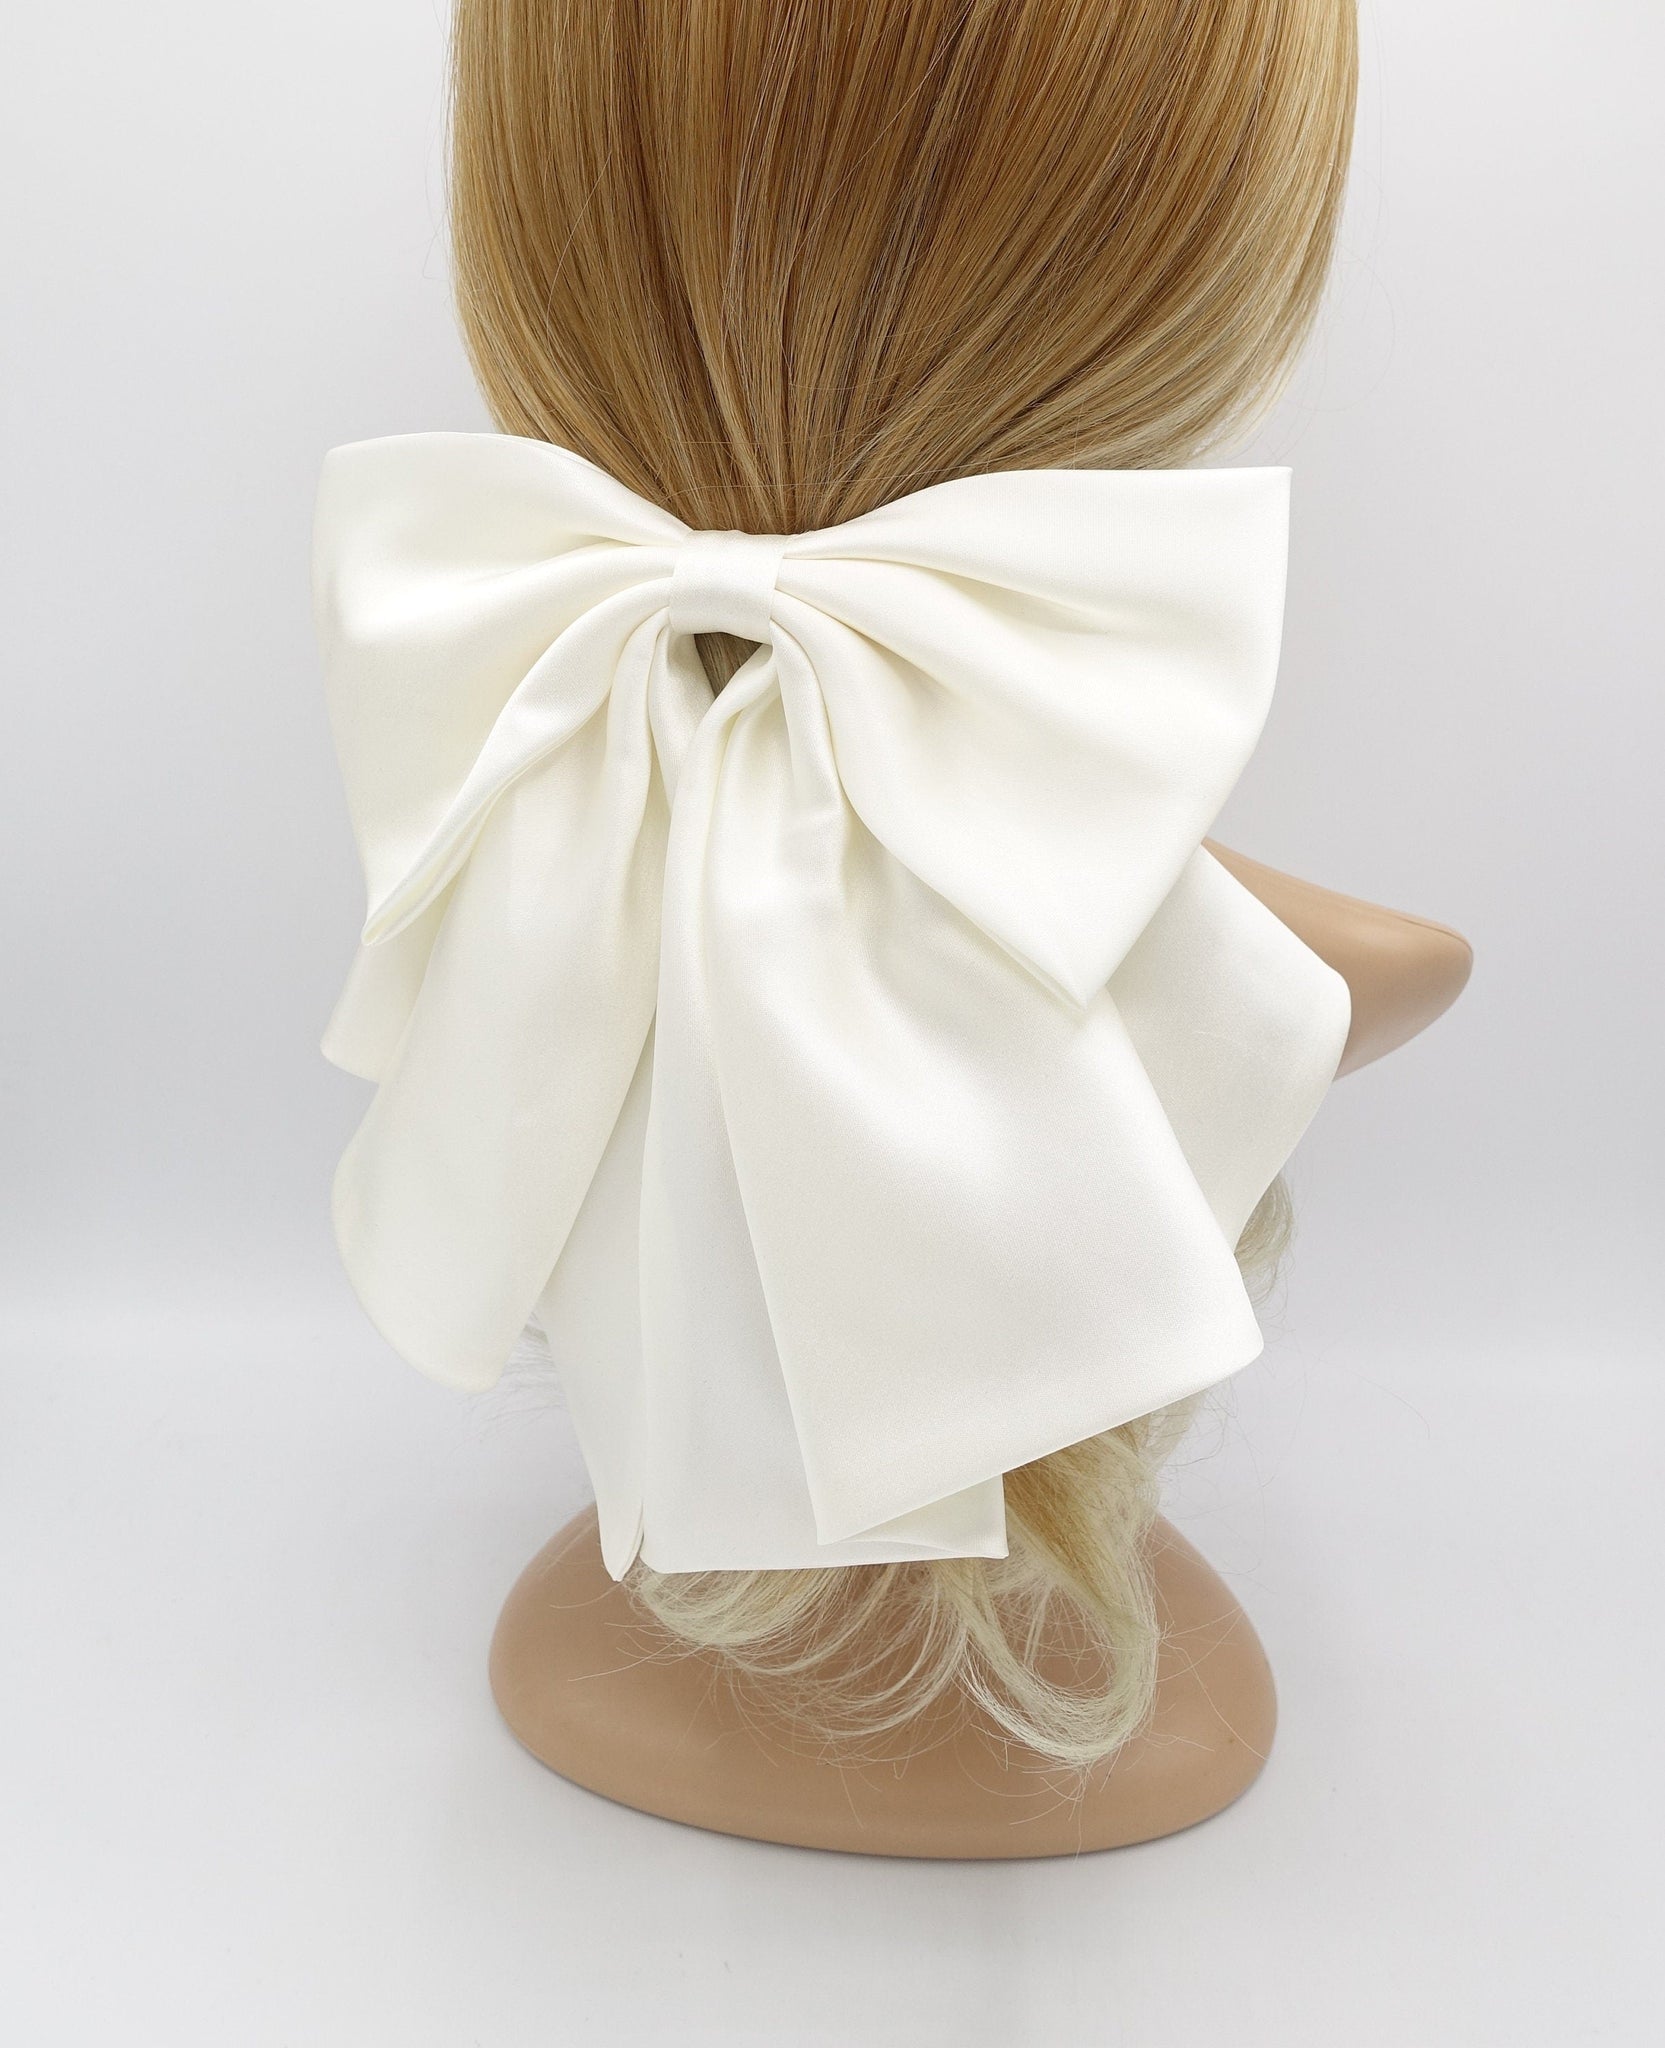 veryshine.com Barrette (Bow) Cream white satin suit hair bow classic ...